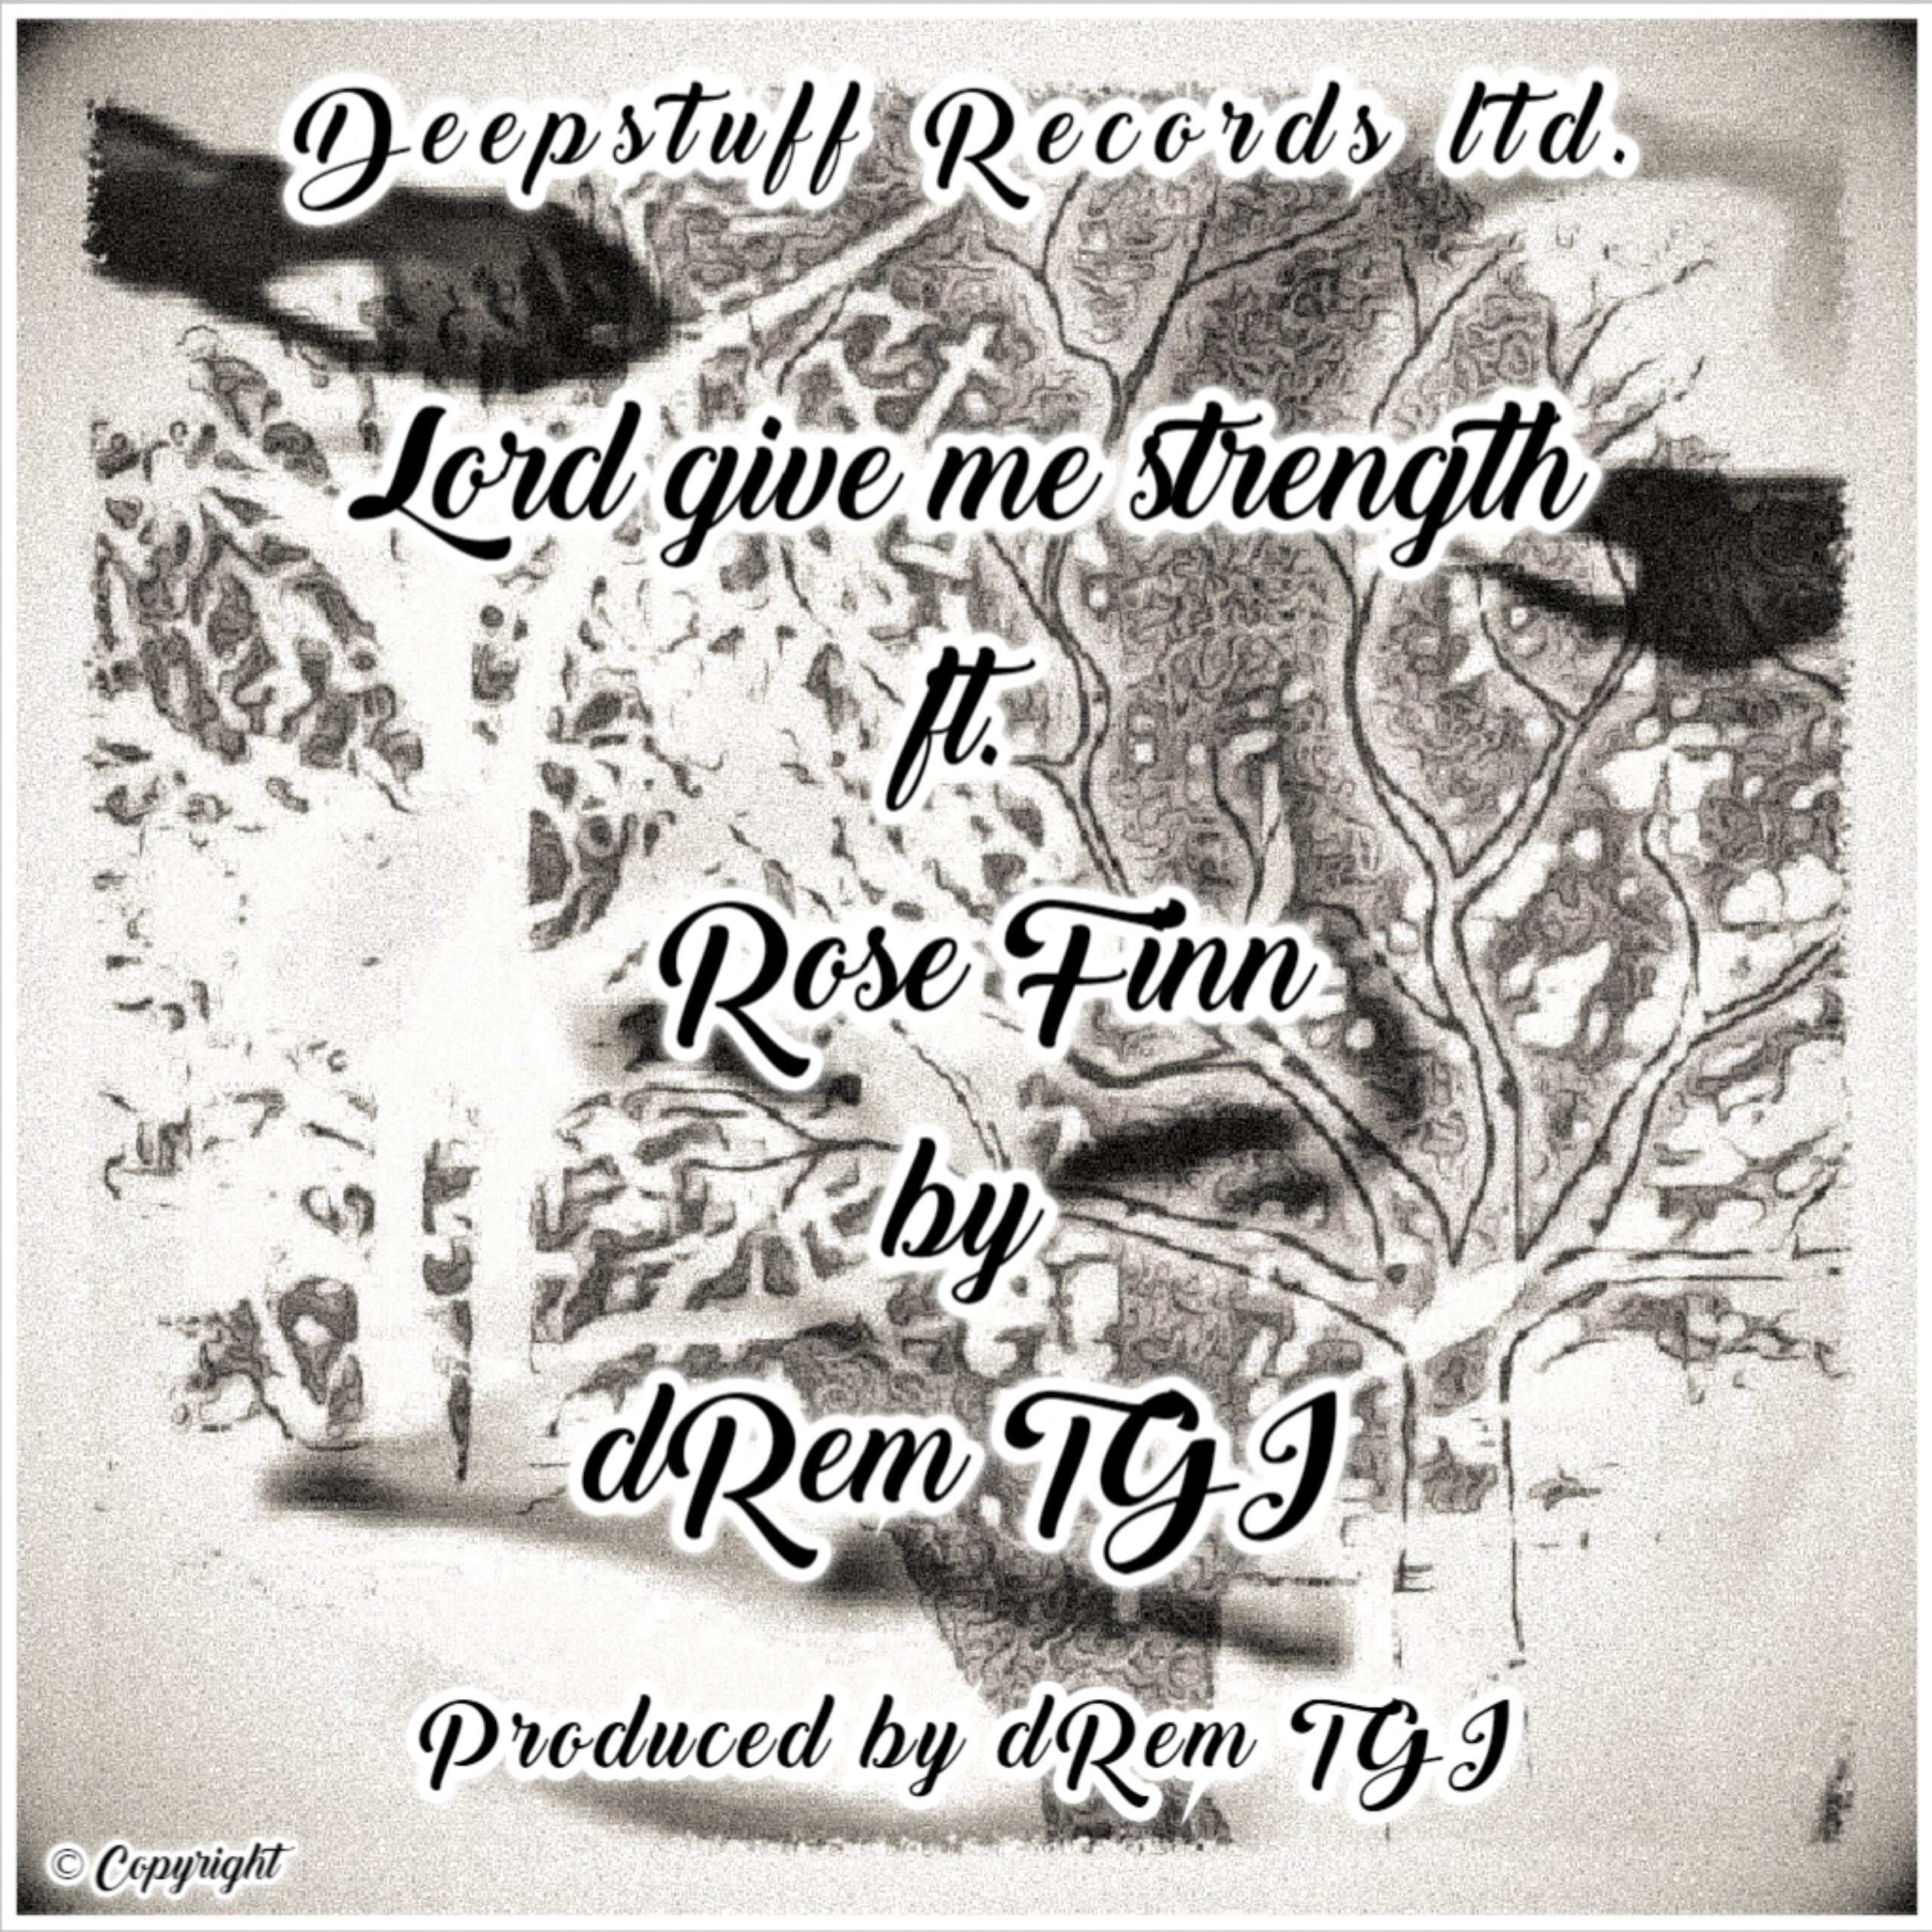 Lord give me strength ft. Rose Finn by dRem TGI